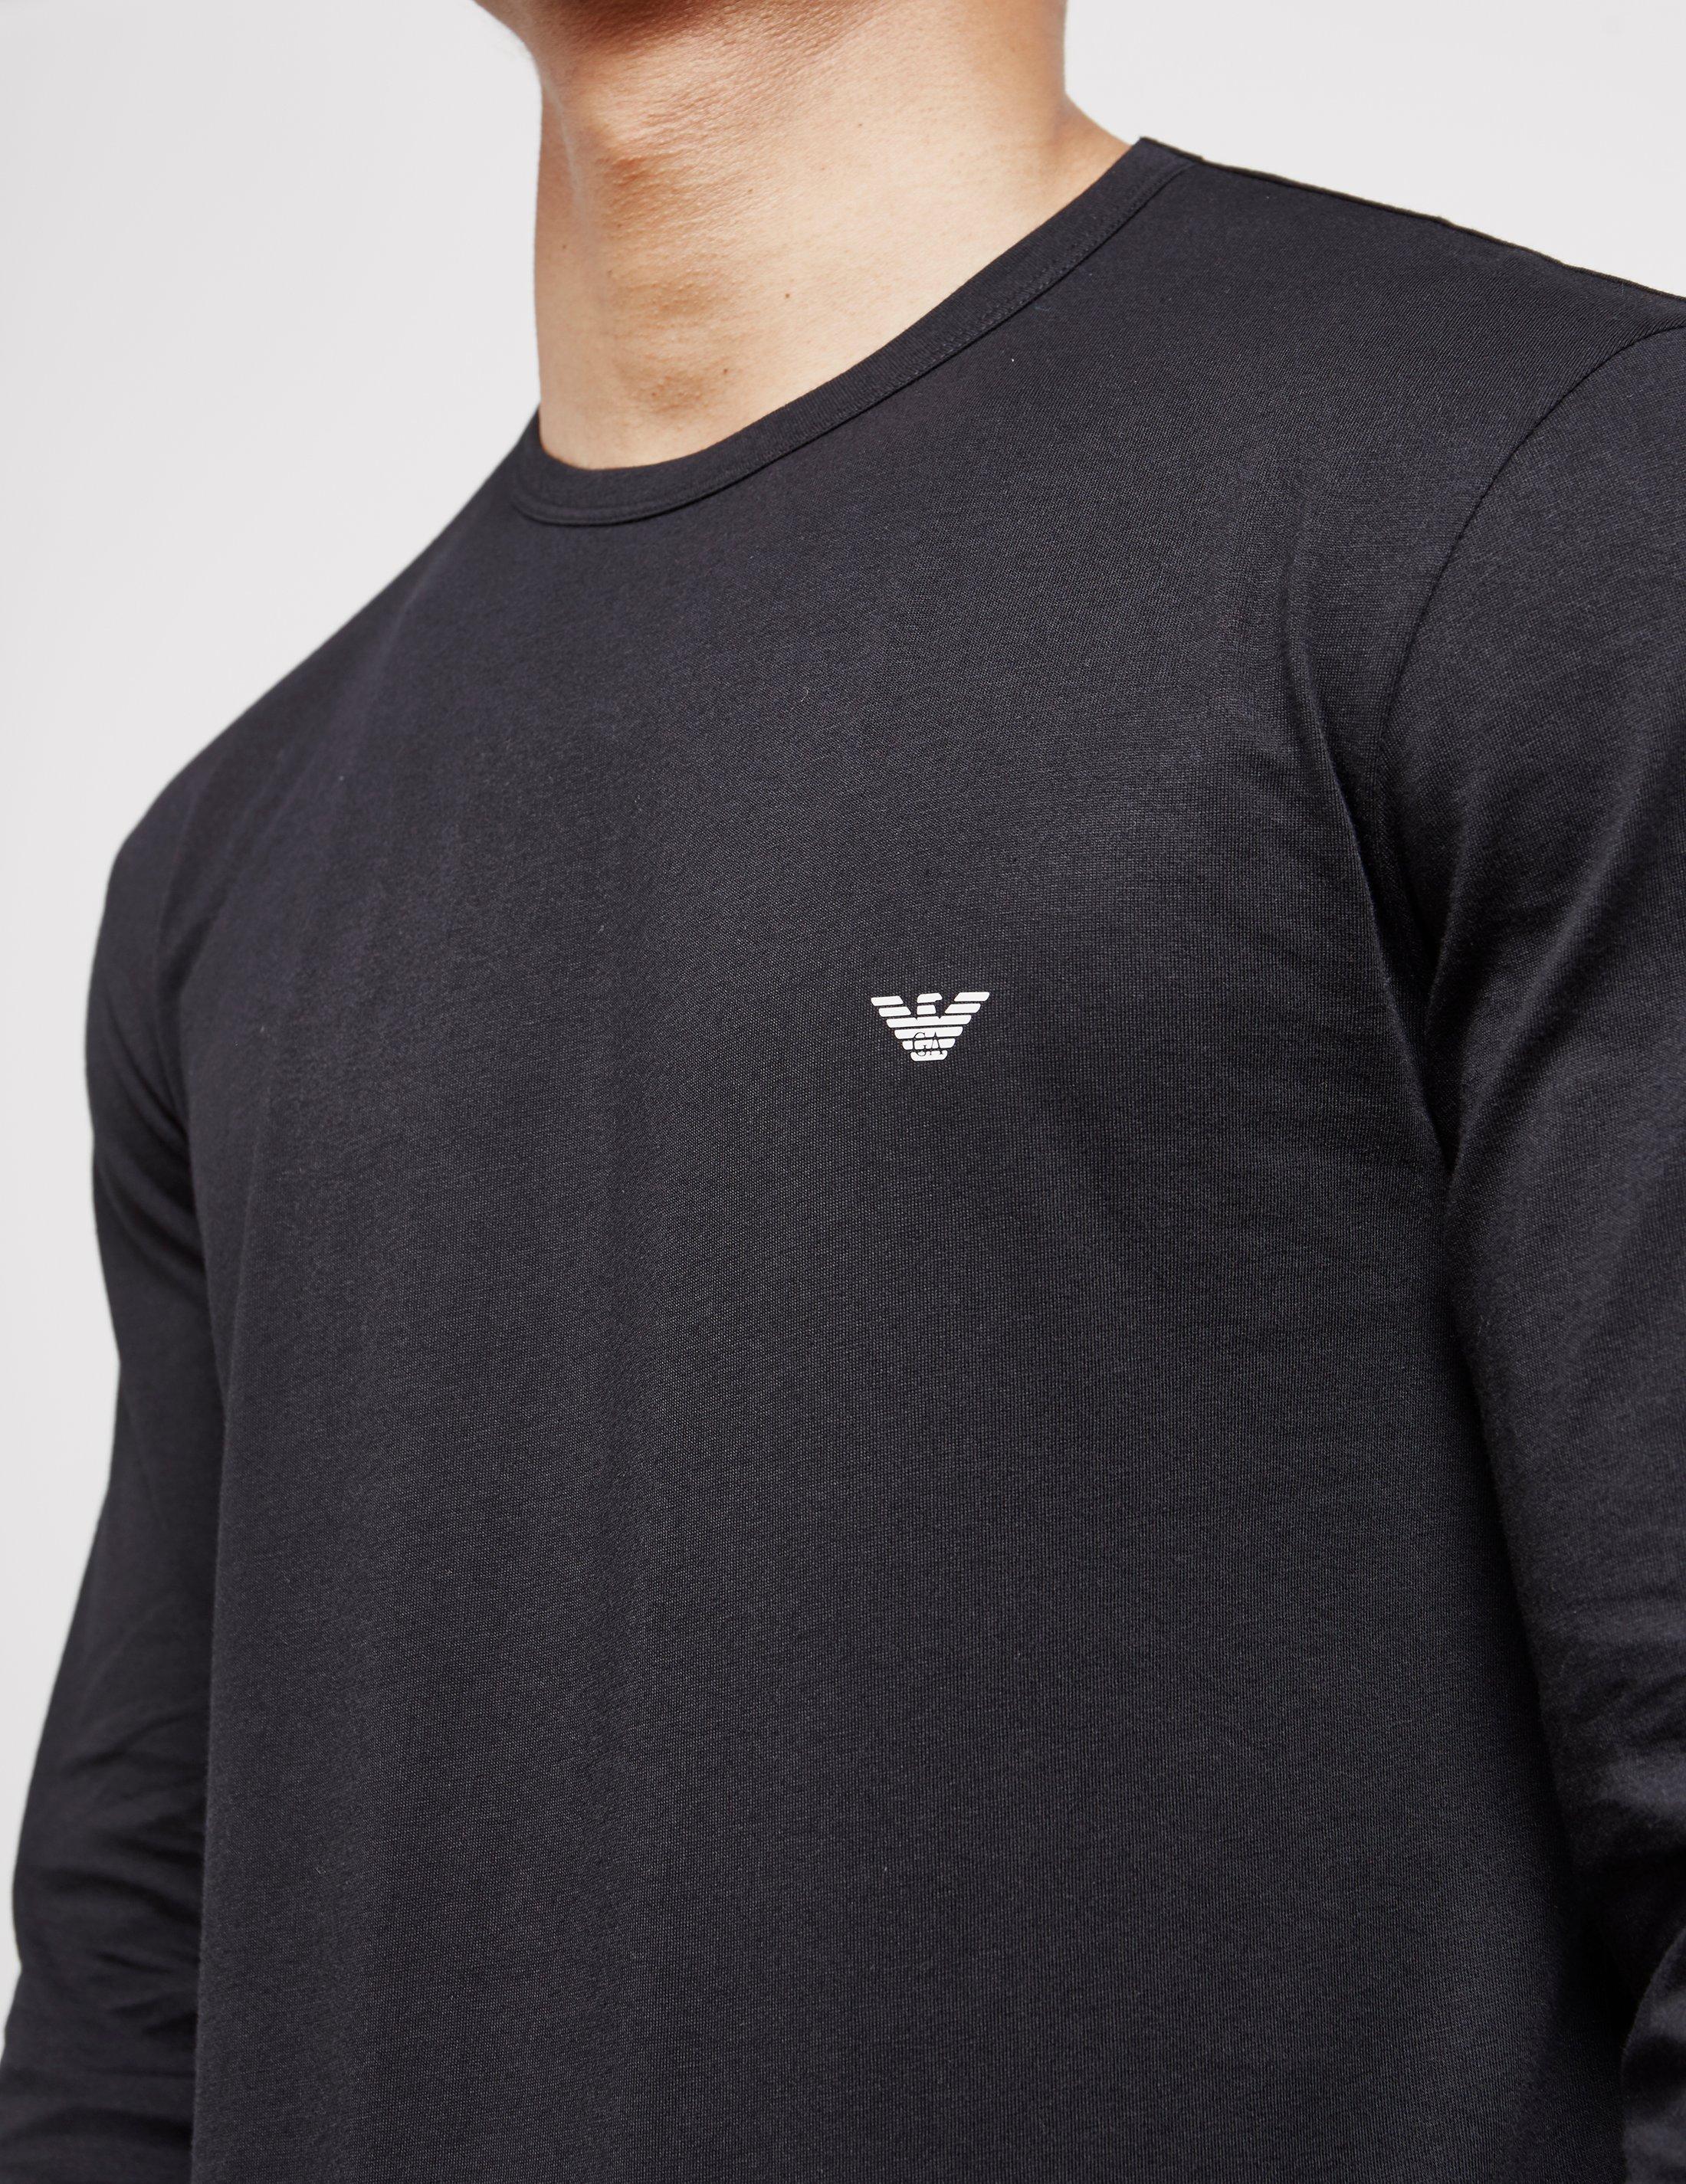 Emporio Armani Long Sleeve Crew T-shirt Black in Black for Men - Lyst